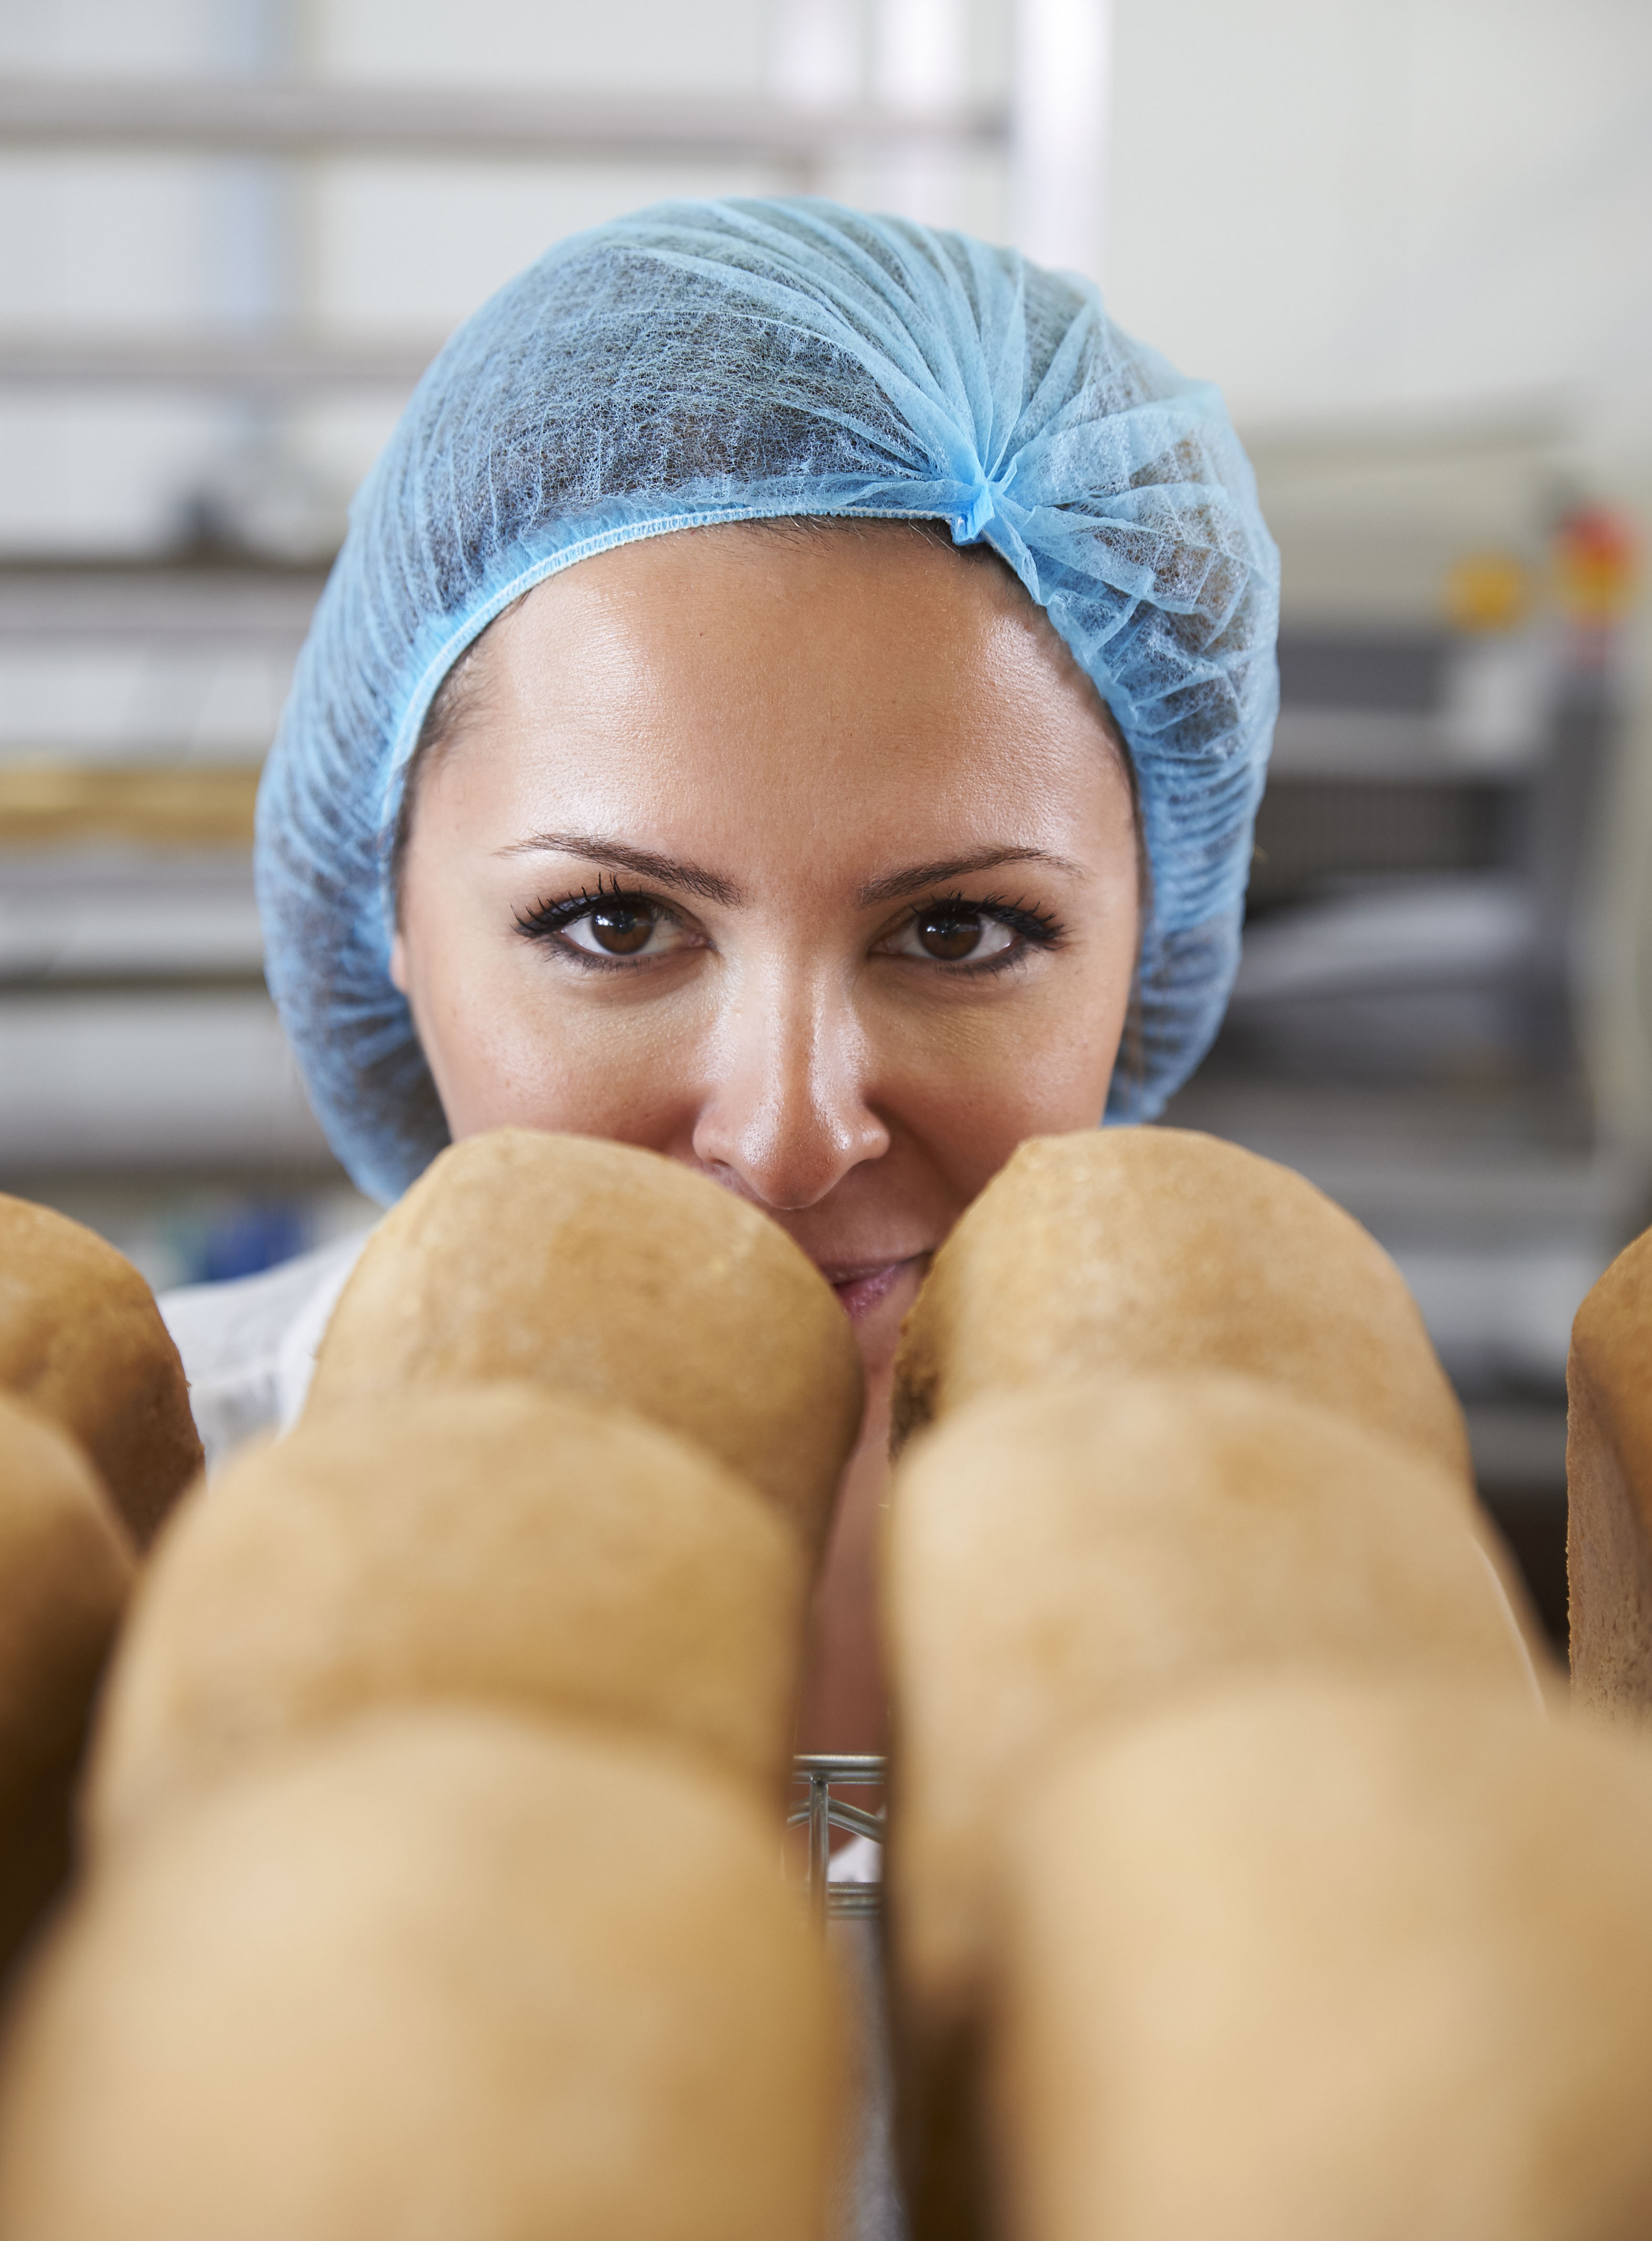 Good Grain Bakery launches range of gluten-free, vegan bread on Ocado and Abel & Cole